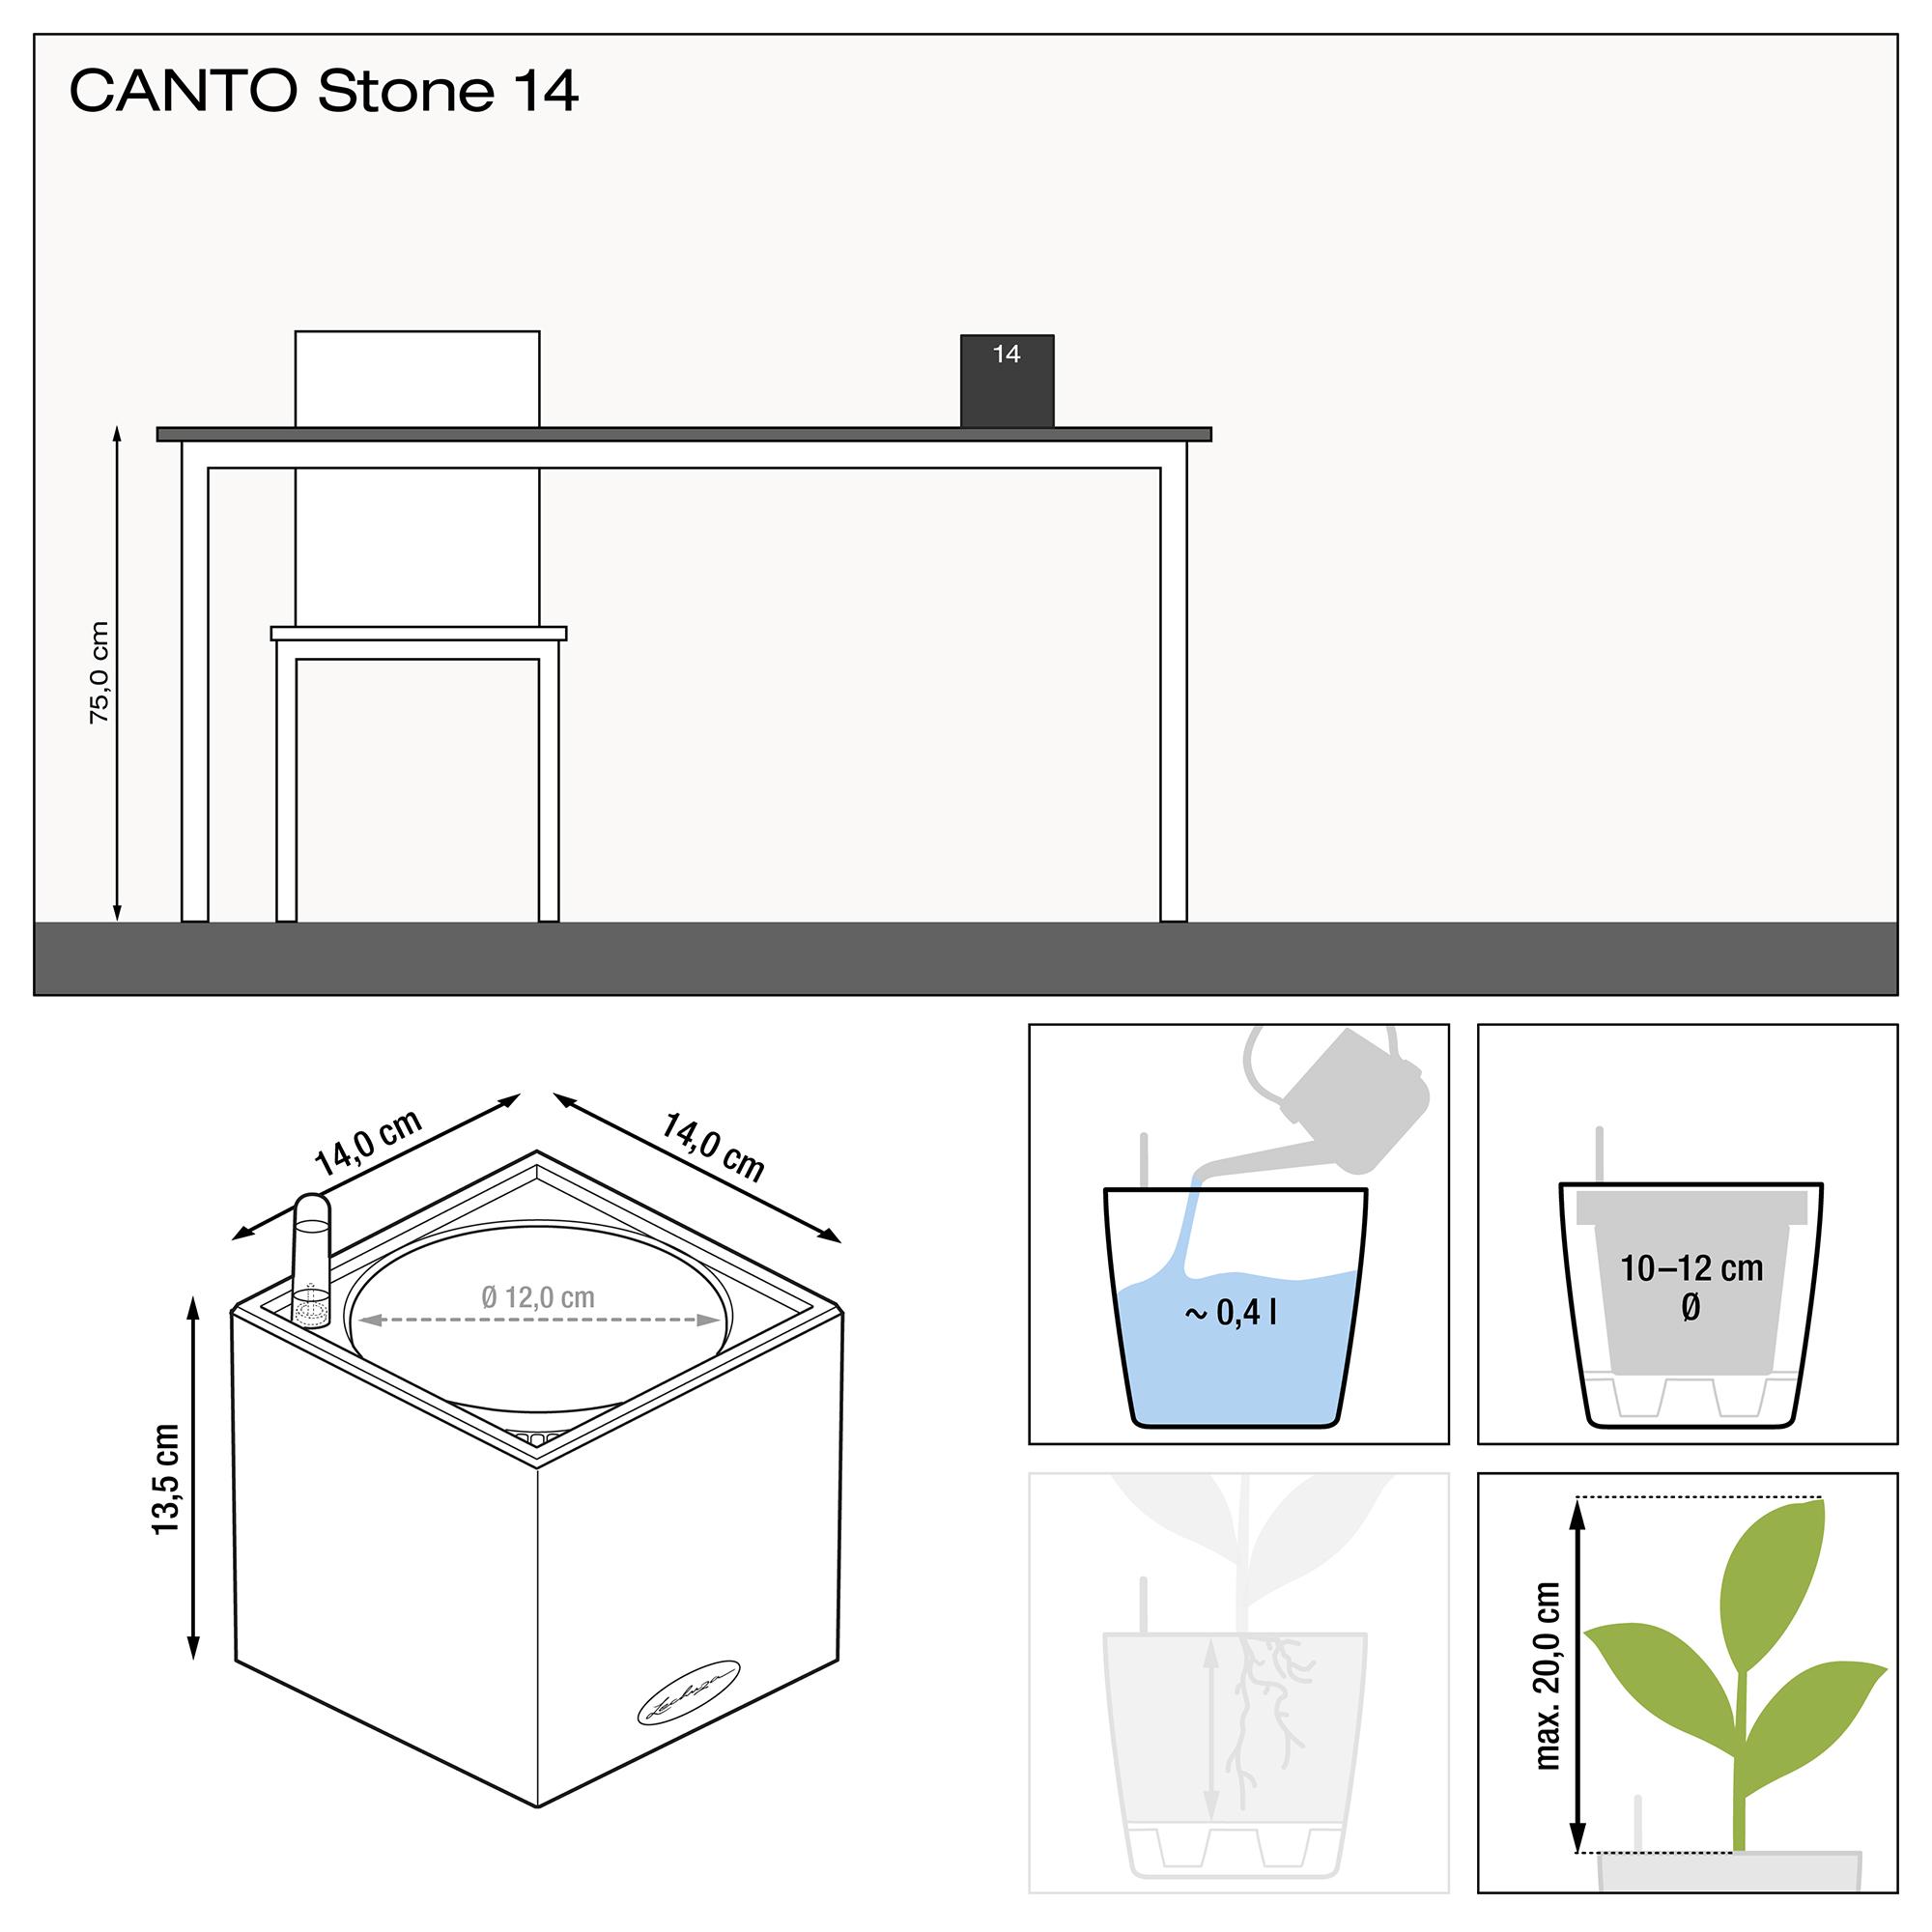 le_canto-stone-14_product_addi_nz